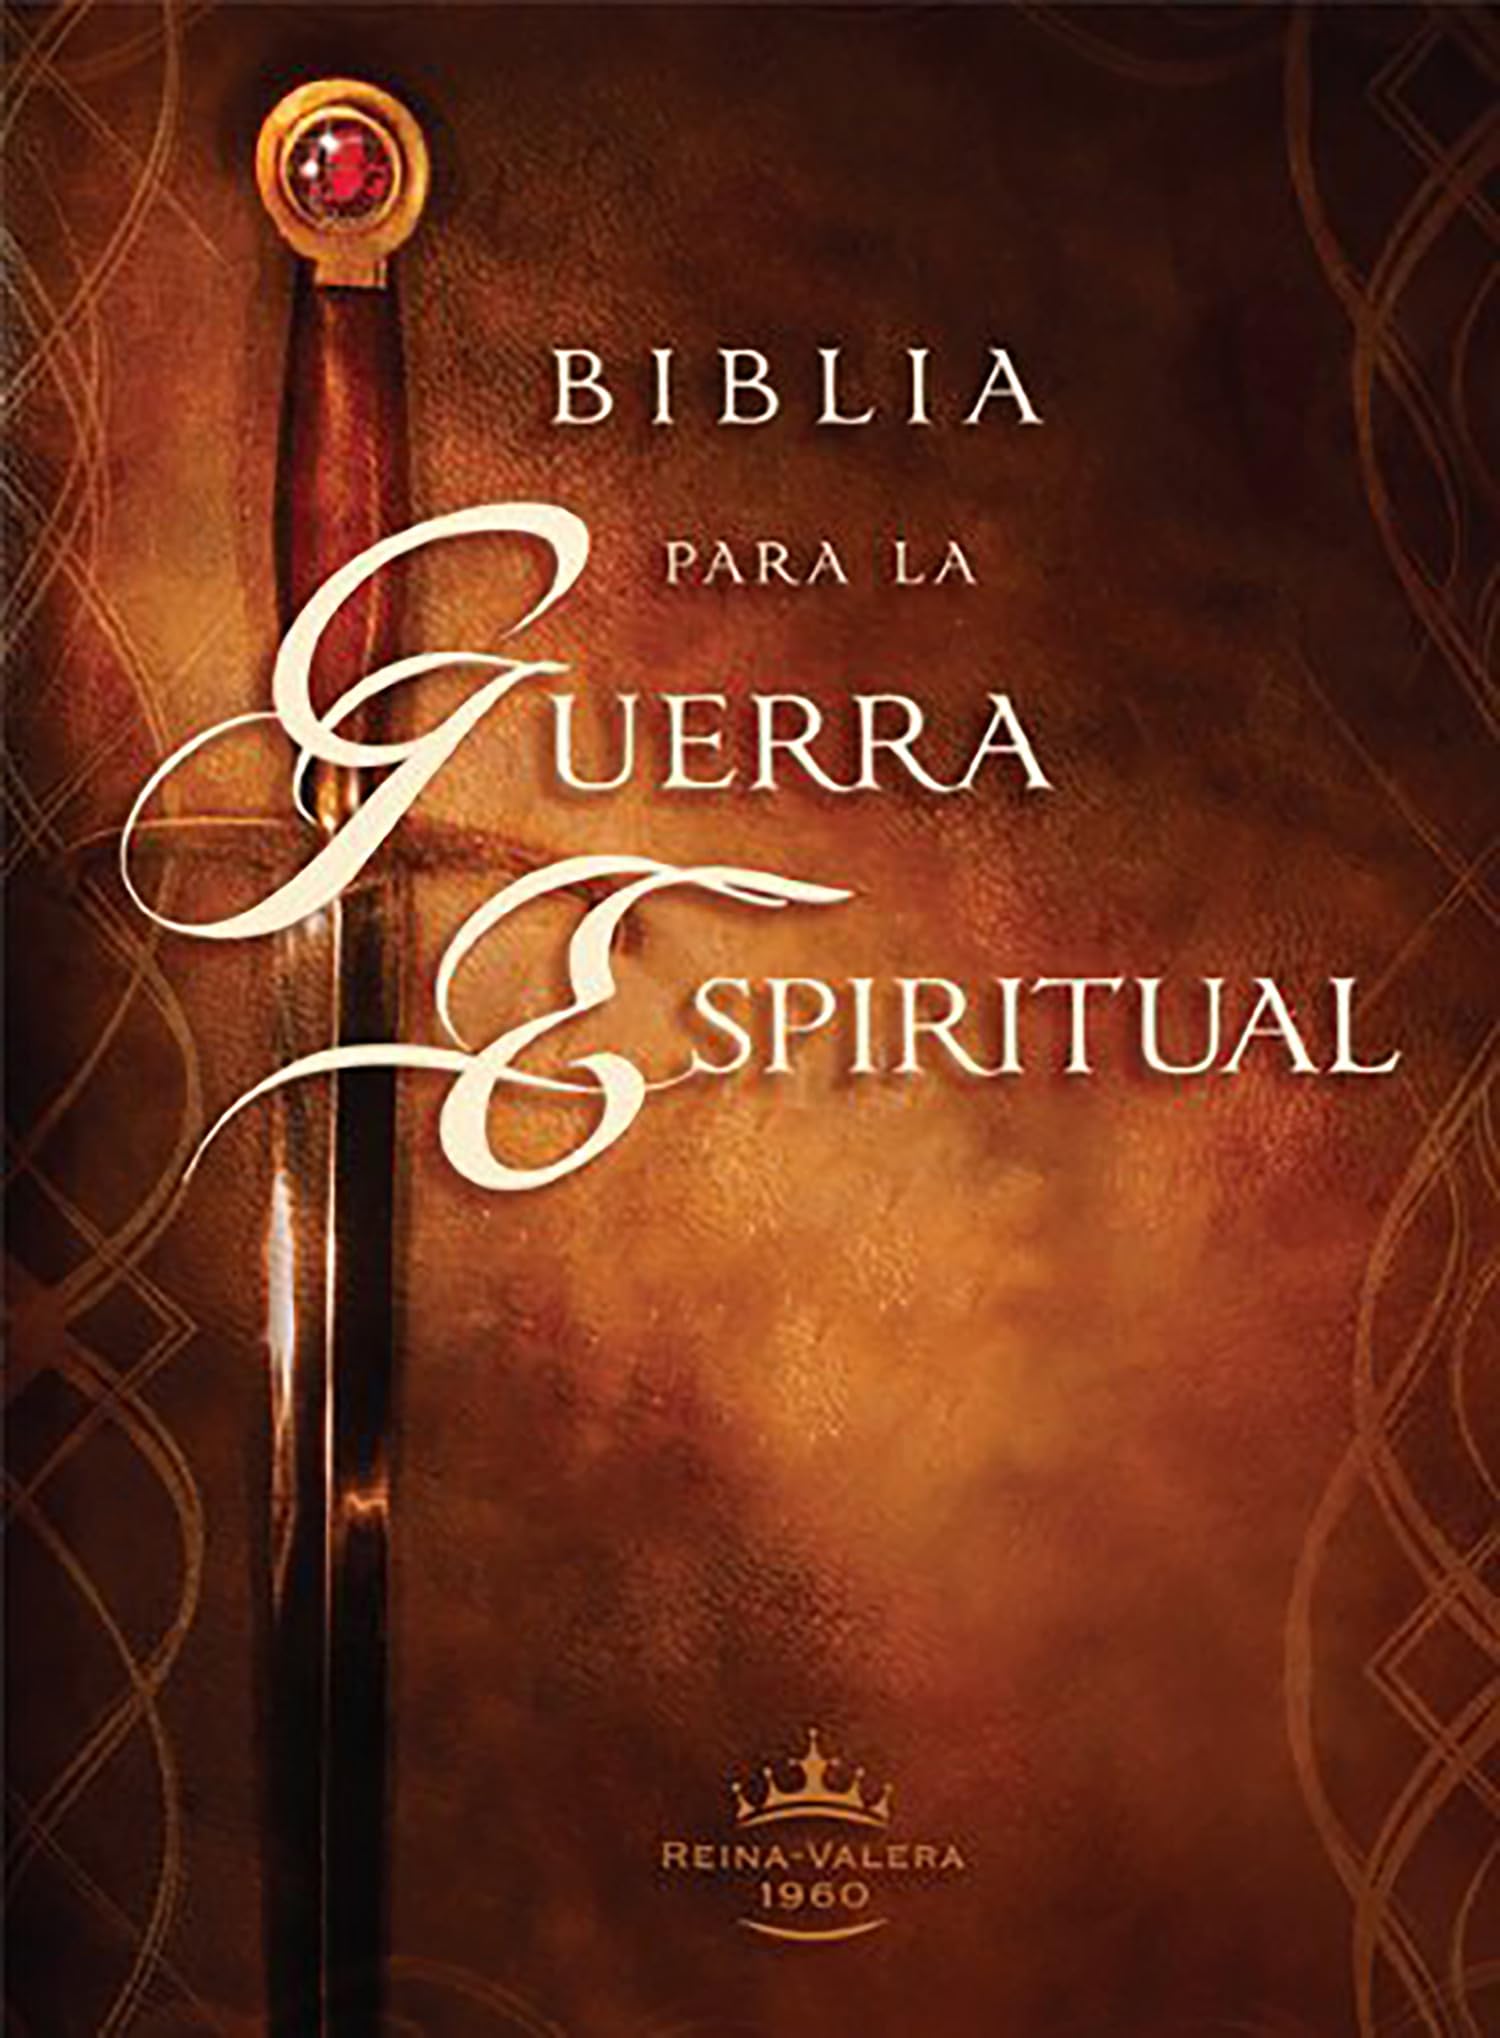 RVR 1960 para la guerra espiritual tapa dura / Spiritual Warfare Bible, Hardcov er (Spanish Edition)